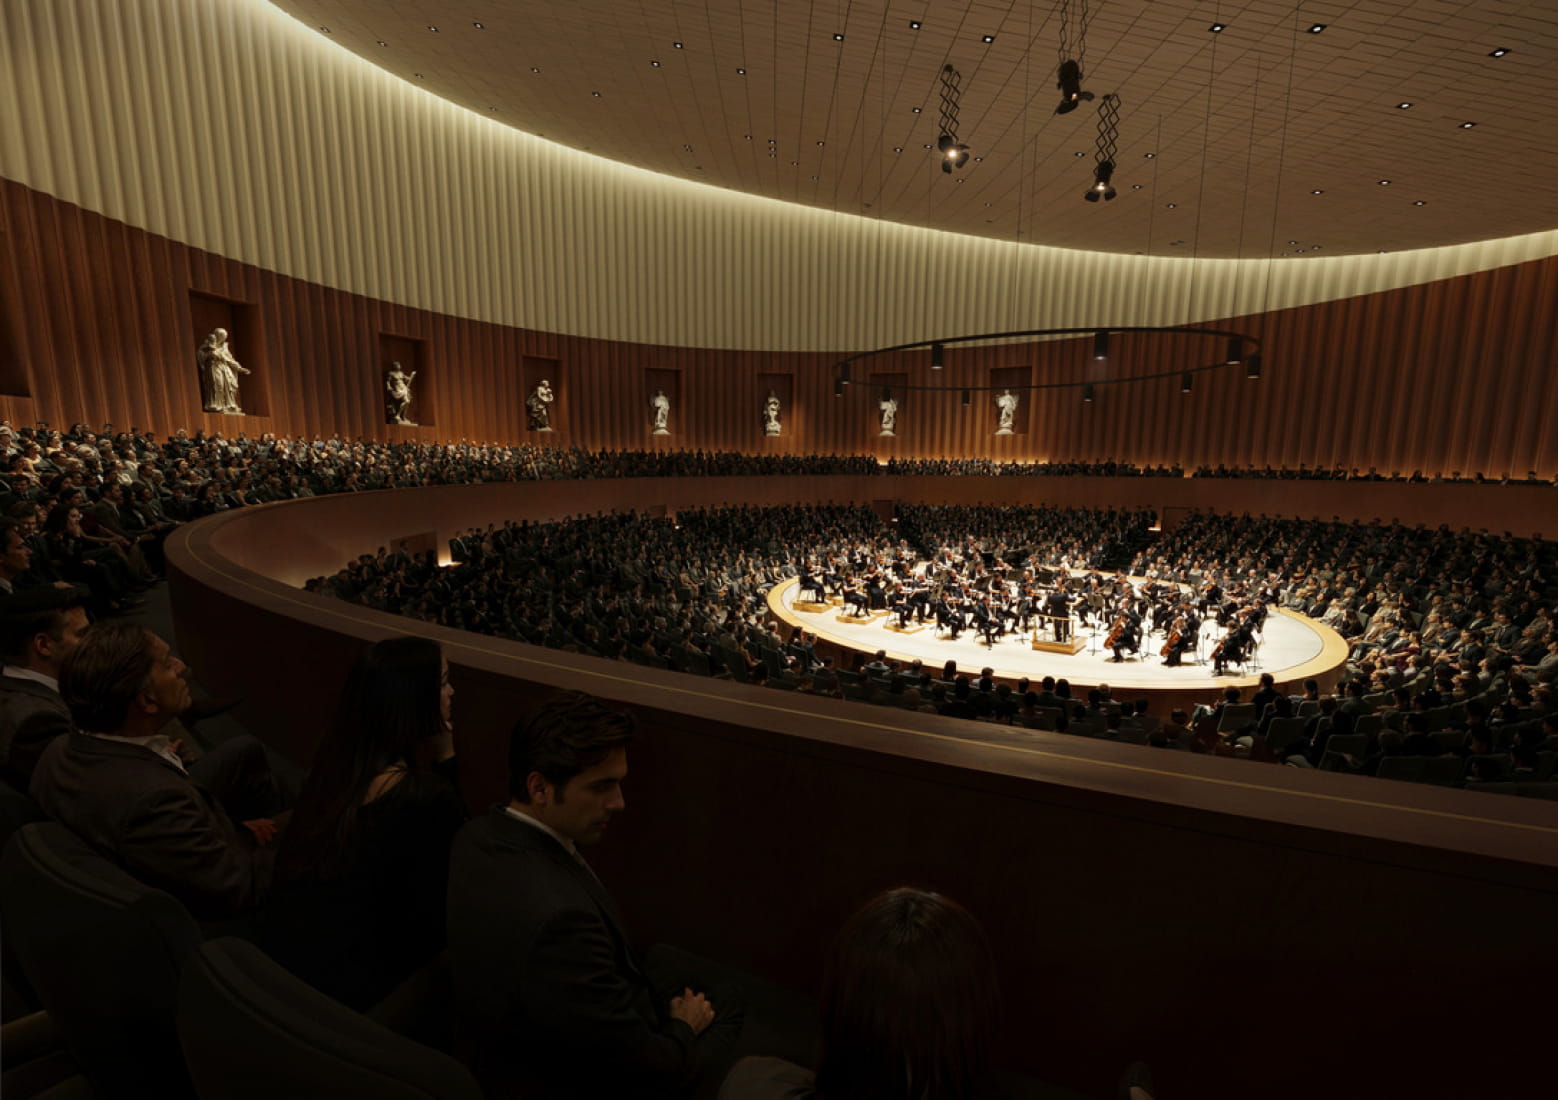 interior-visualization-concert-hall